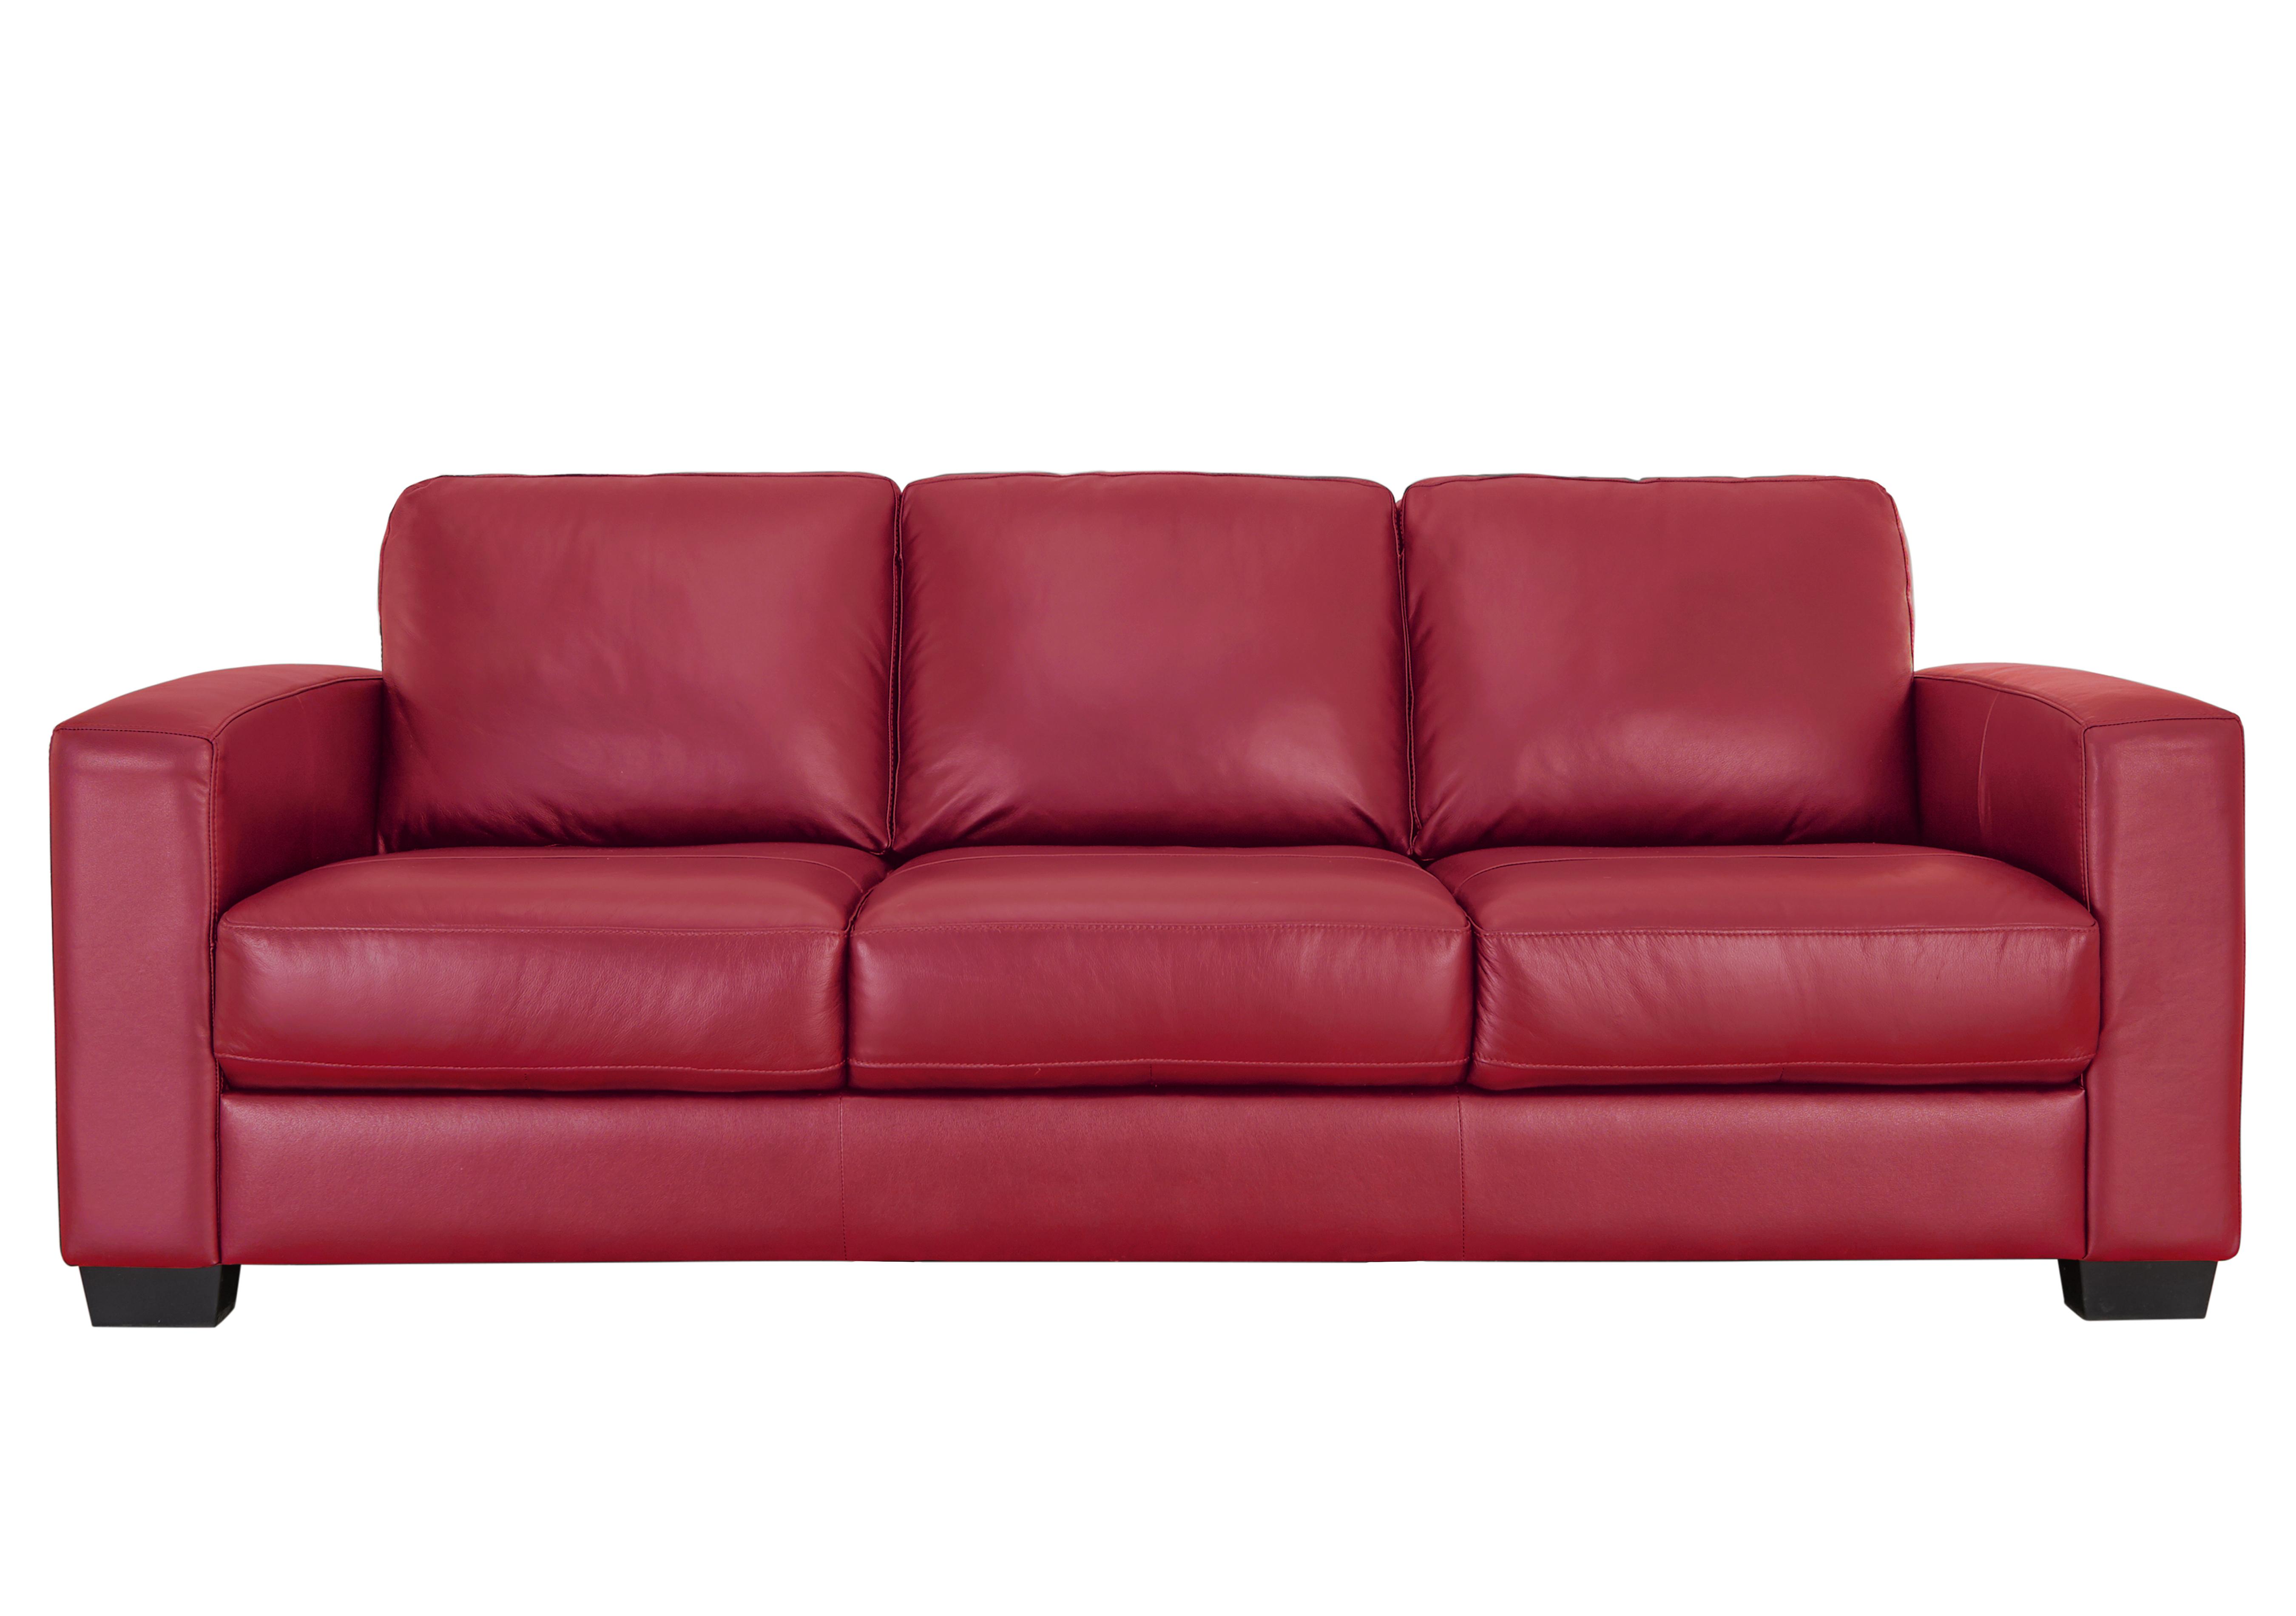 dante 3 seat leather sofa price